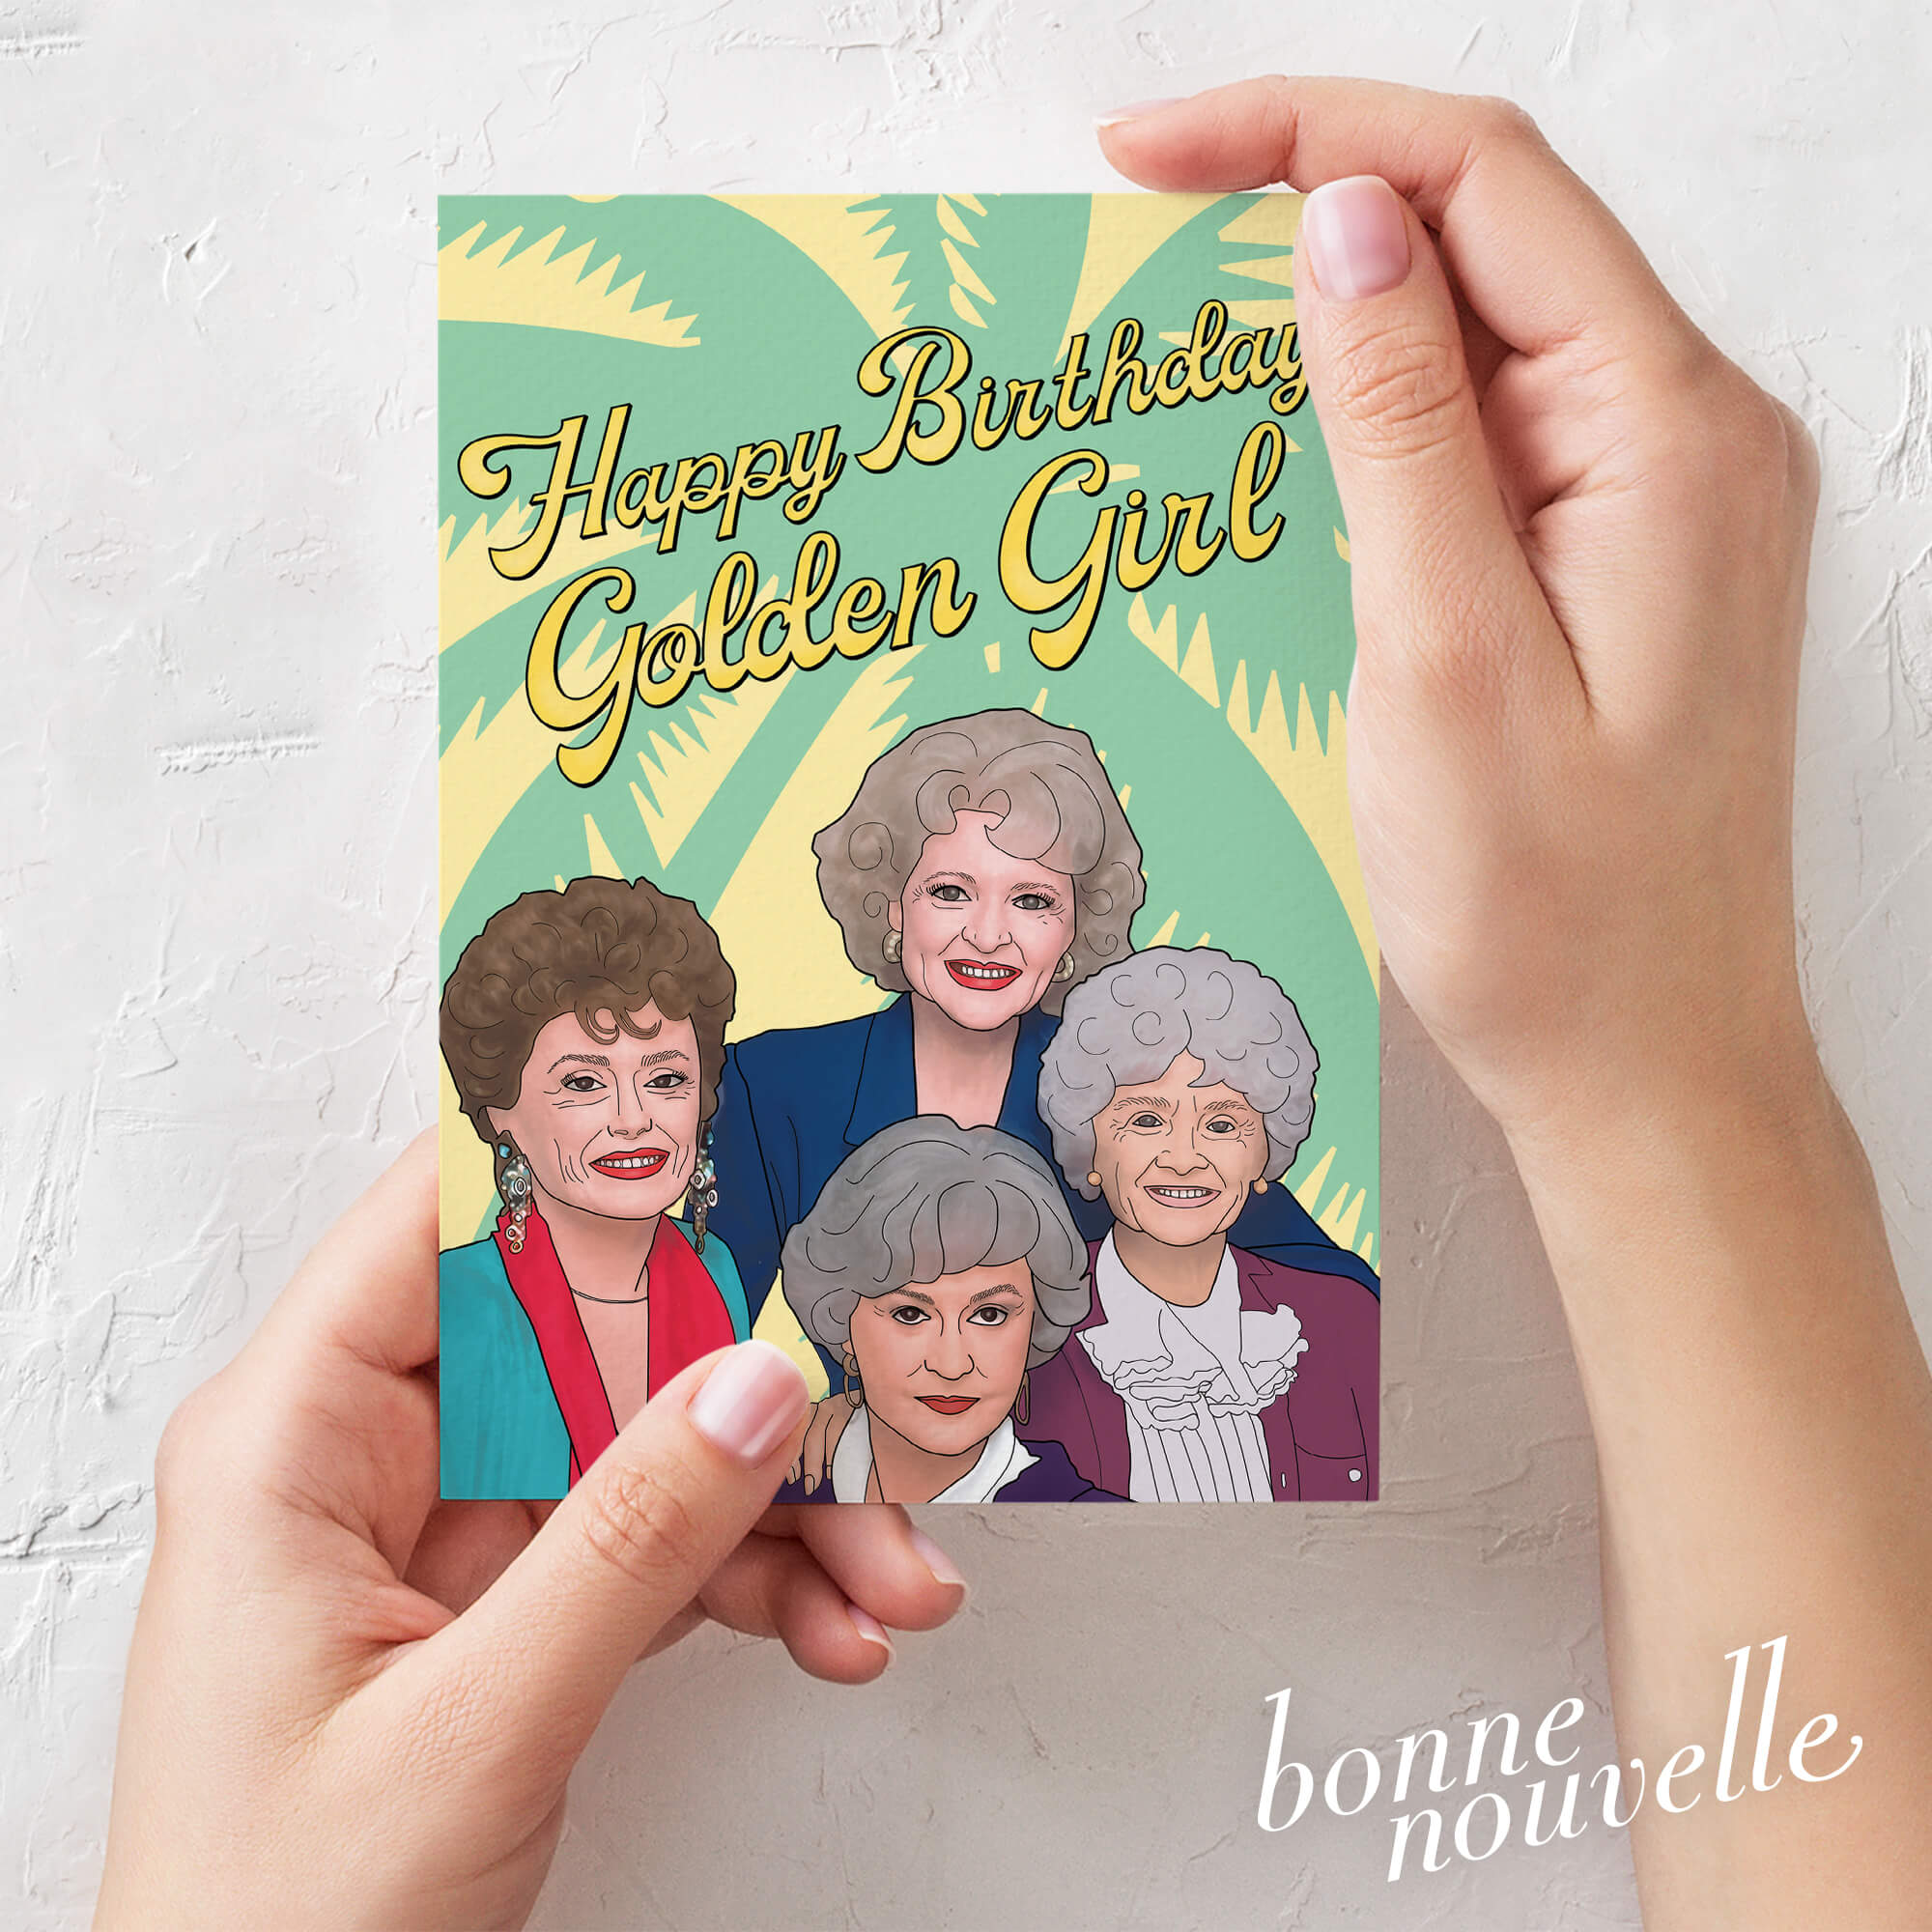 Happy Birthday Golden Girl Cute Birthday Card Greeting Card from